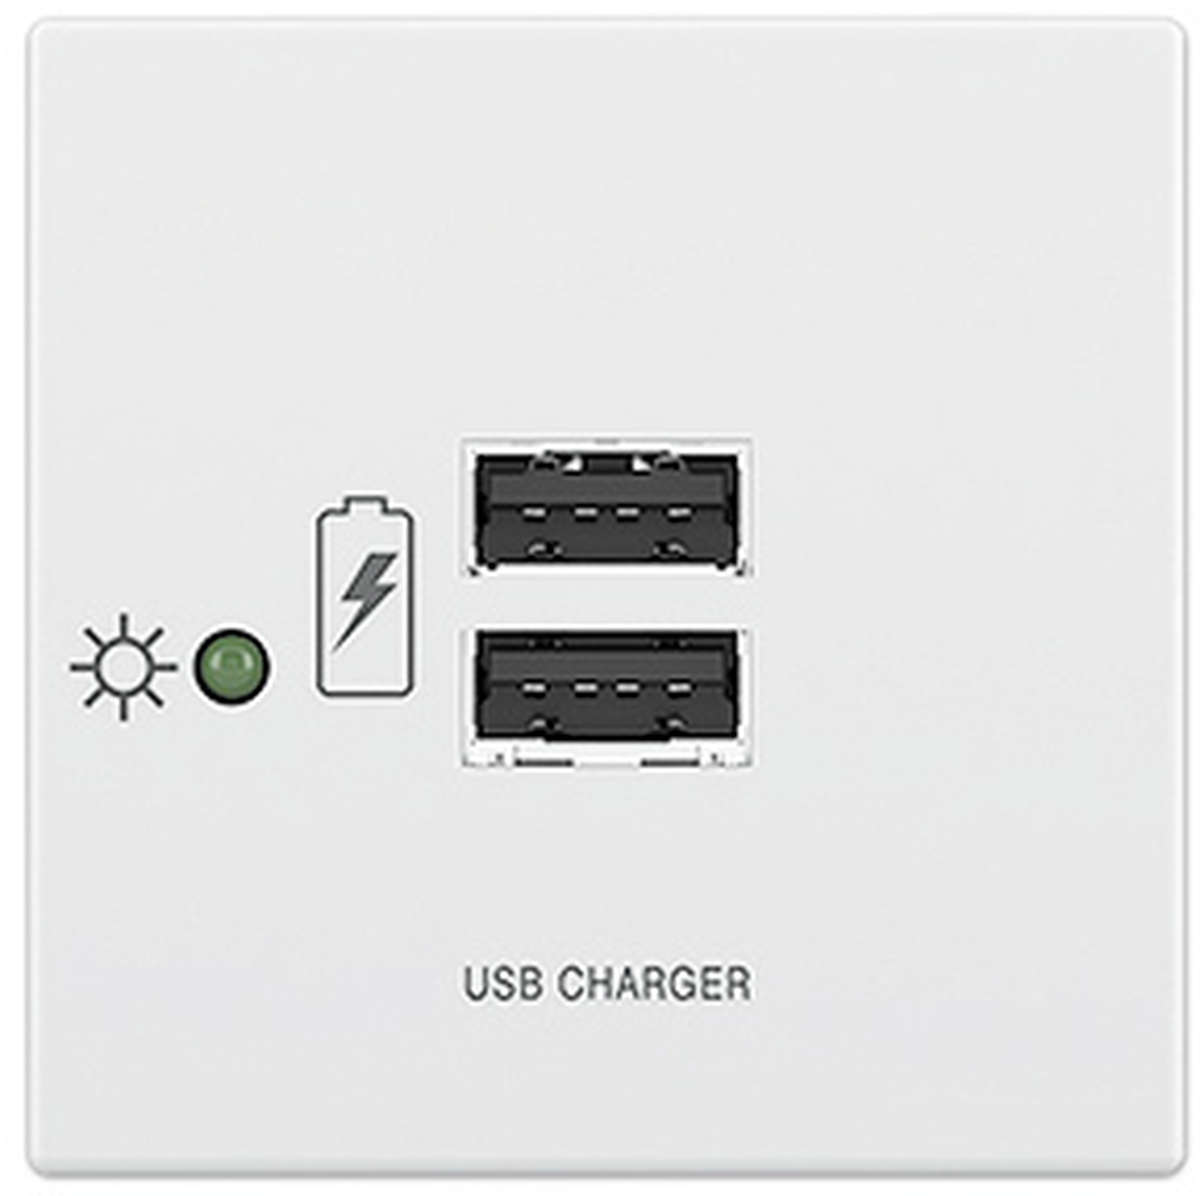 Extron Flex55 USB PowerPlate 102 60-1693-03  product image